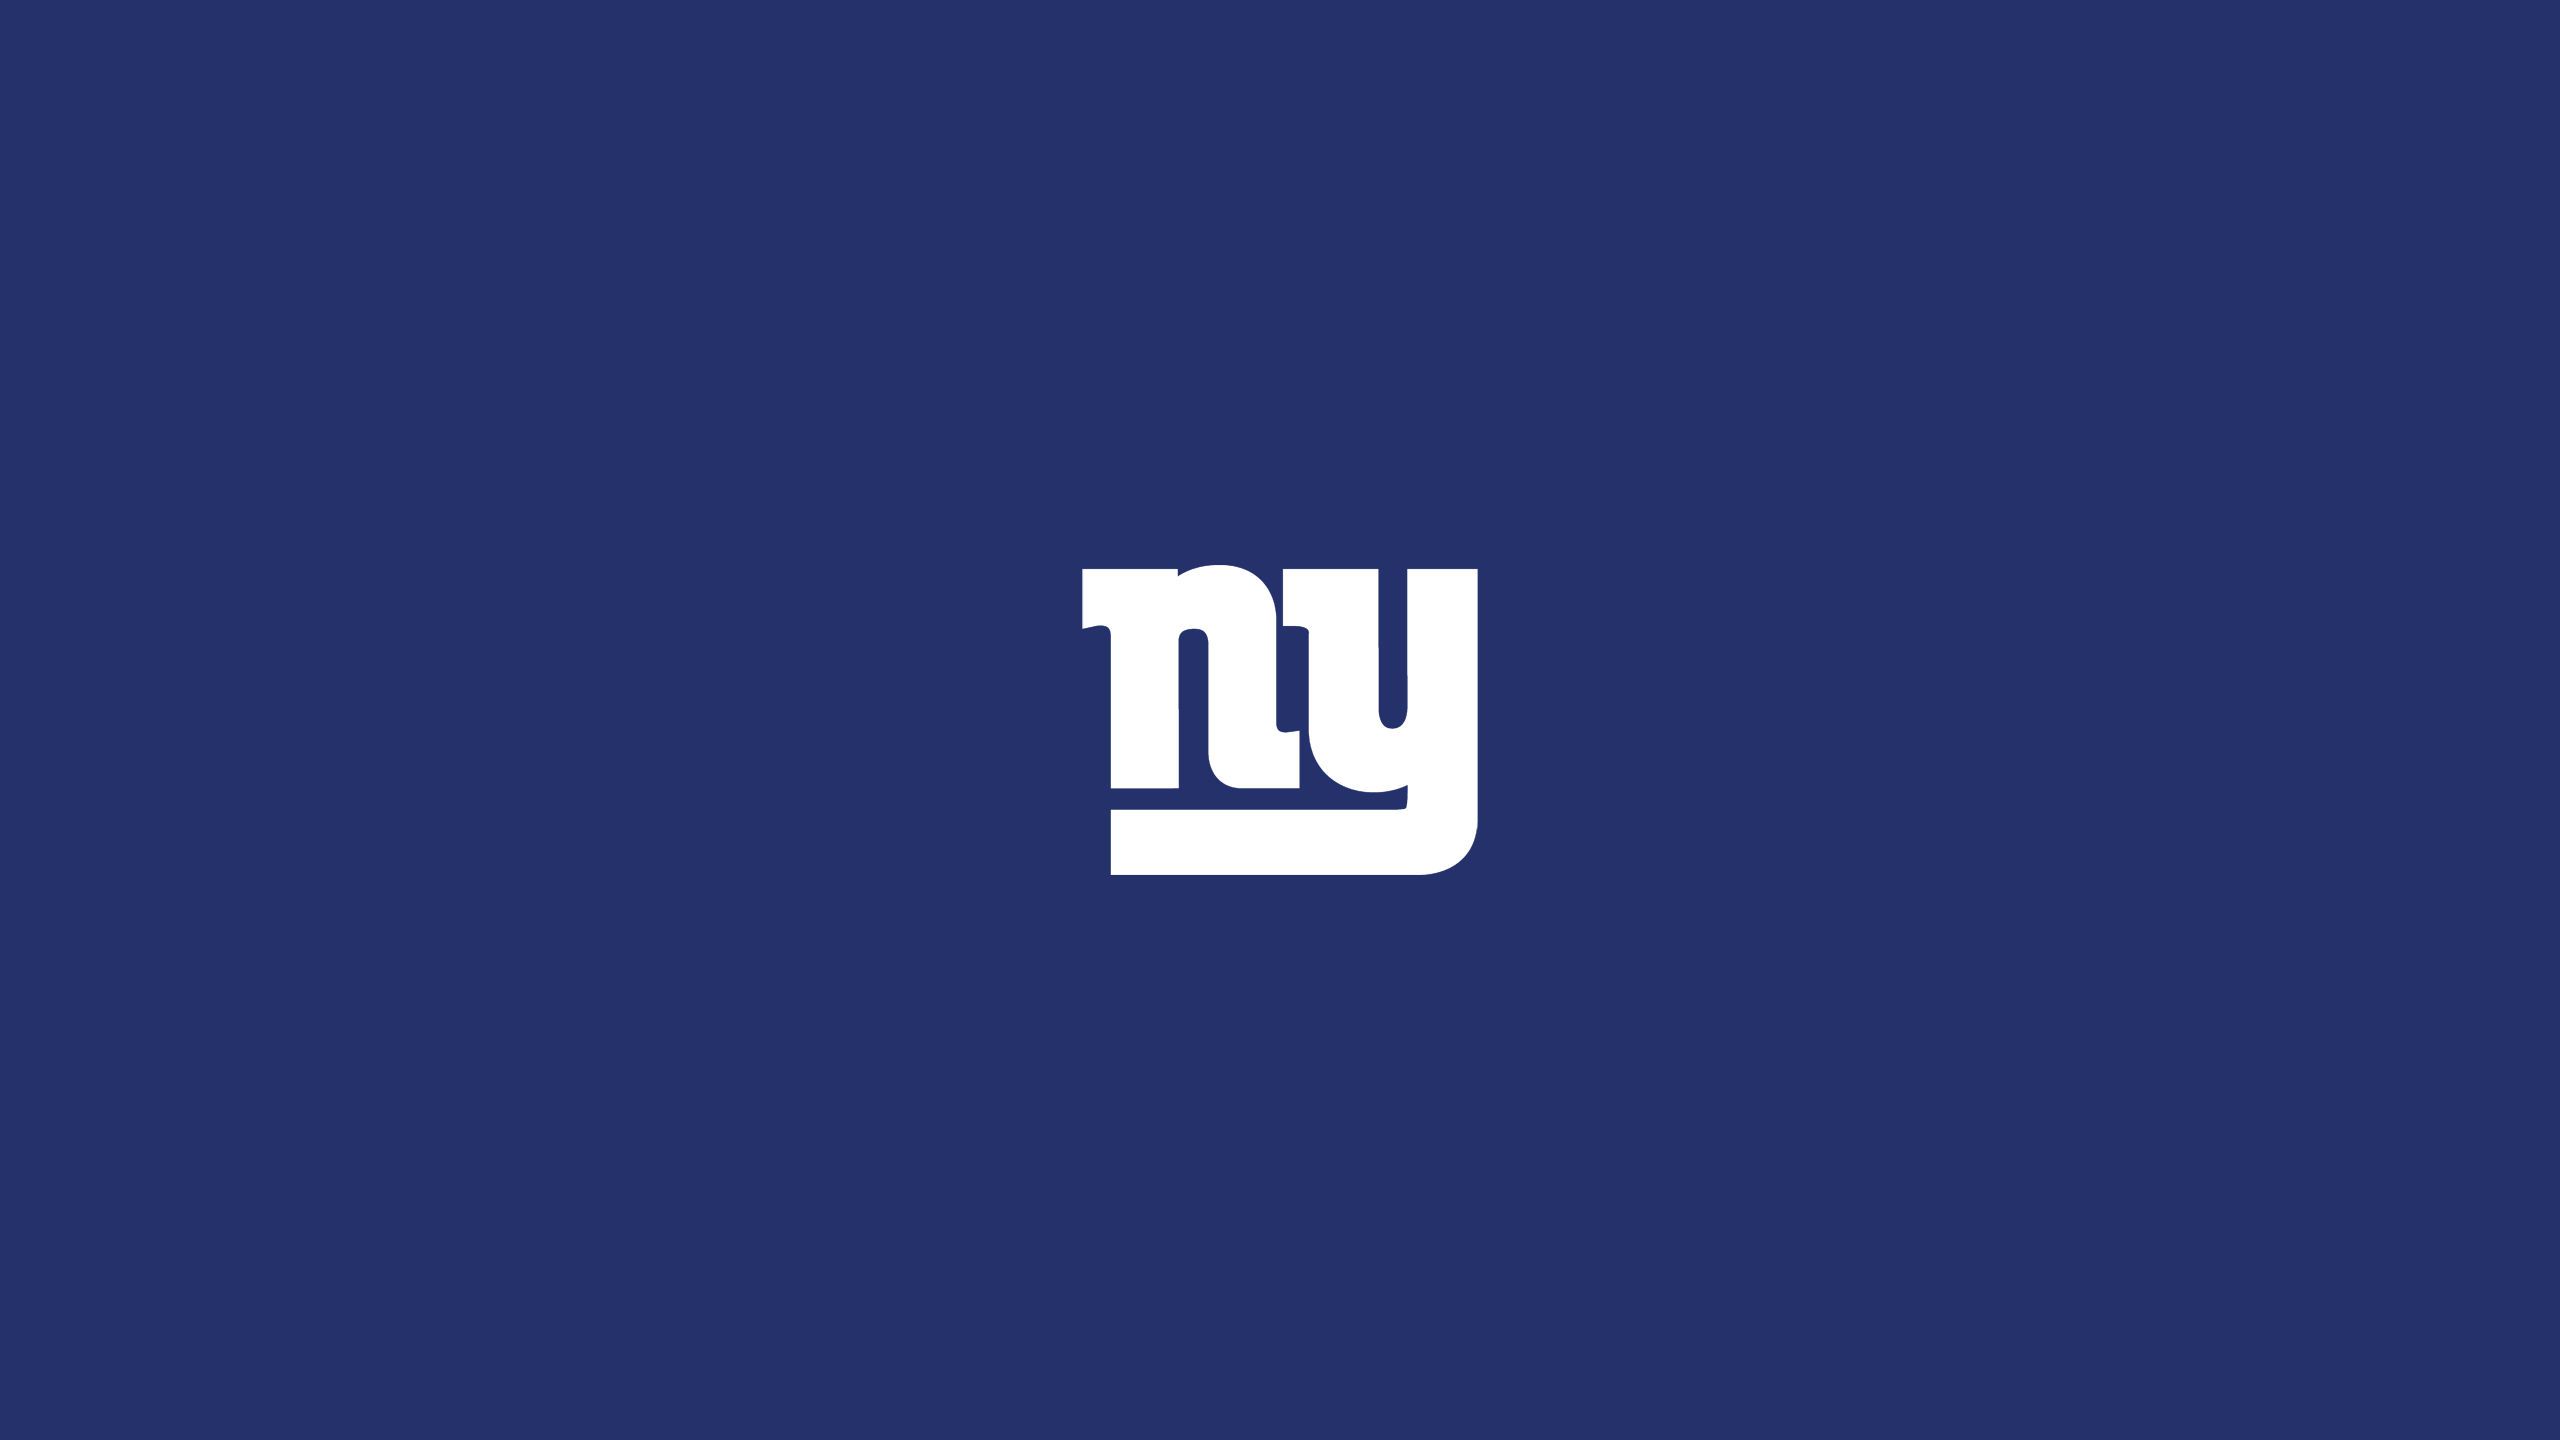 New York Giants - NFL - Square Bettor